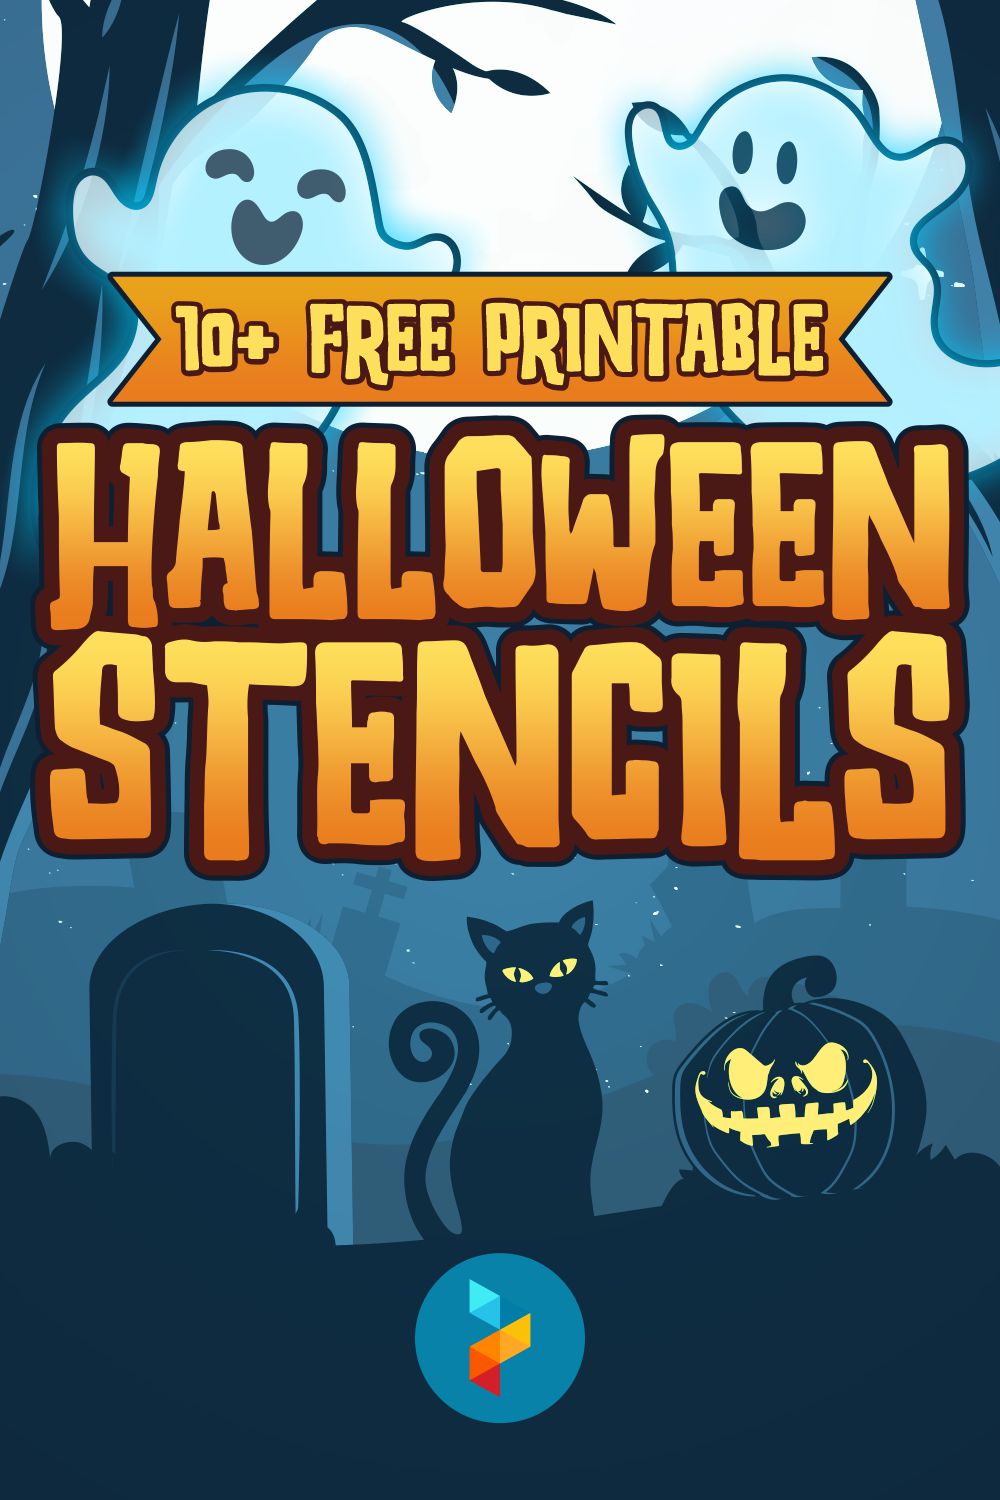 Printable Halloween Stencils